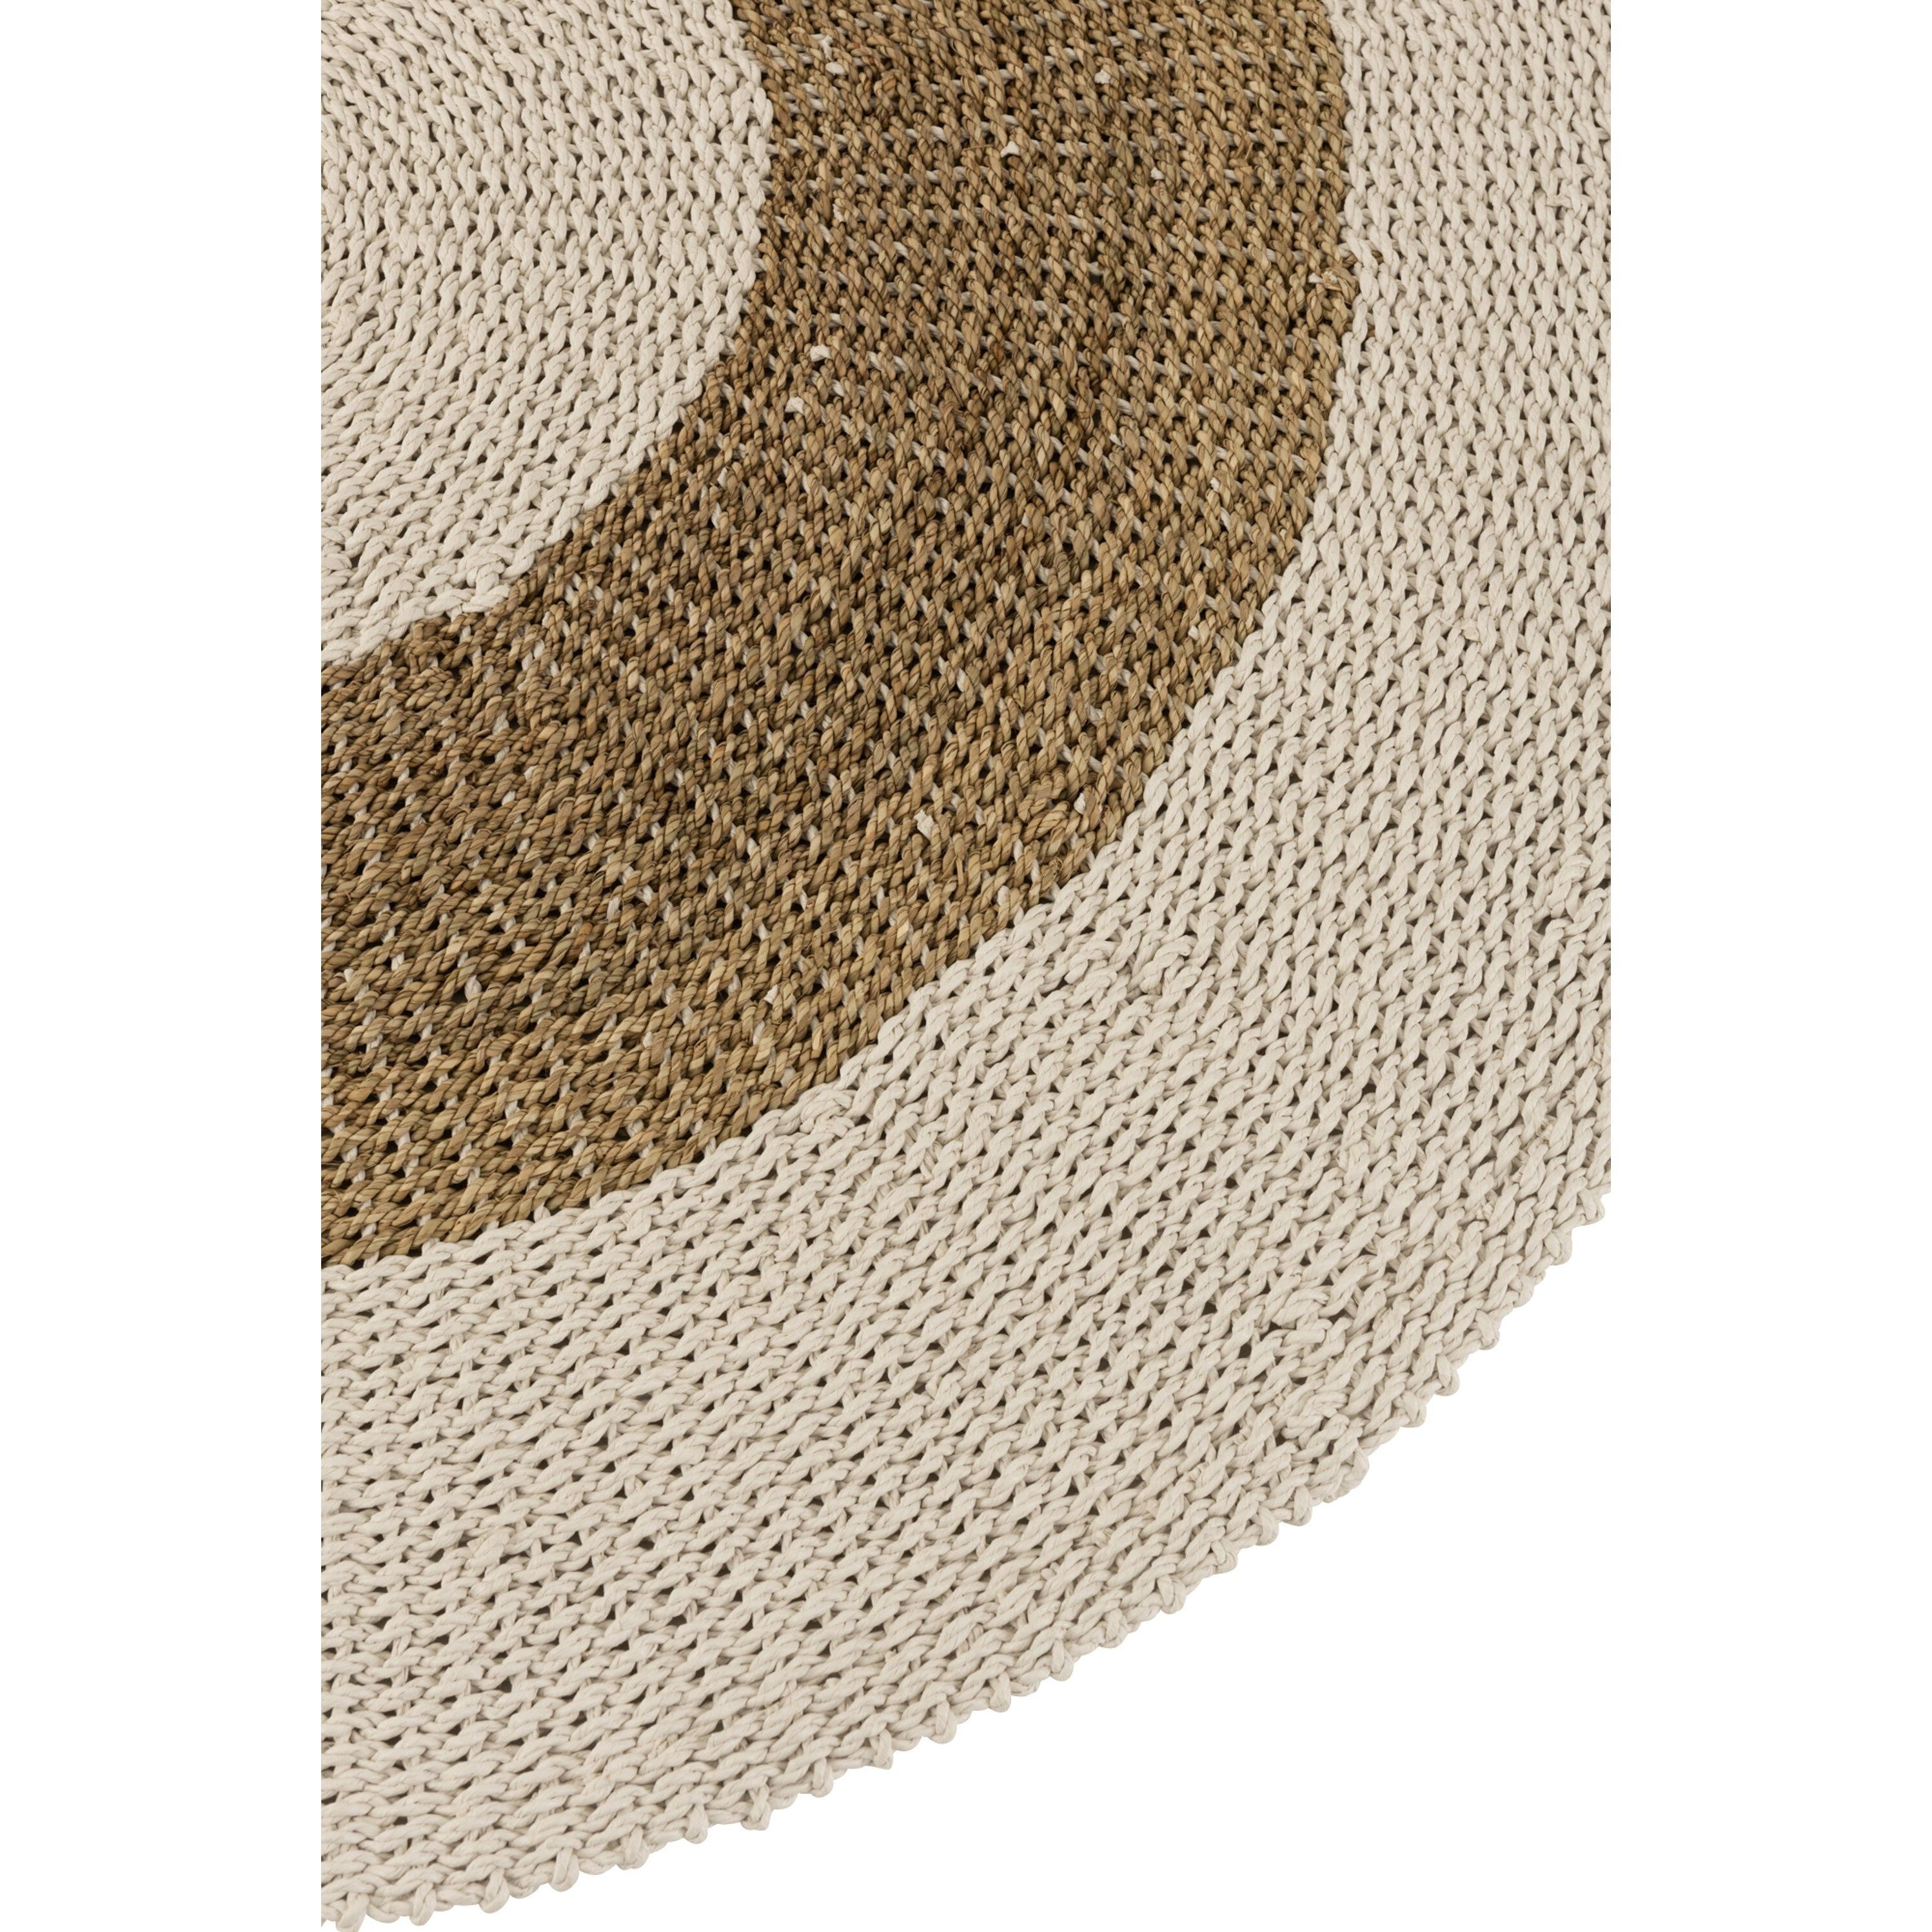 Carpet Round Seagrass White/natural Medium